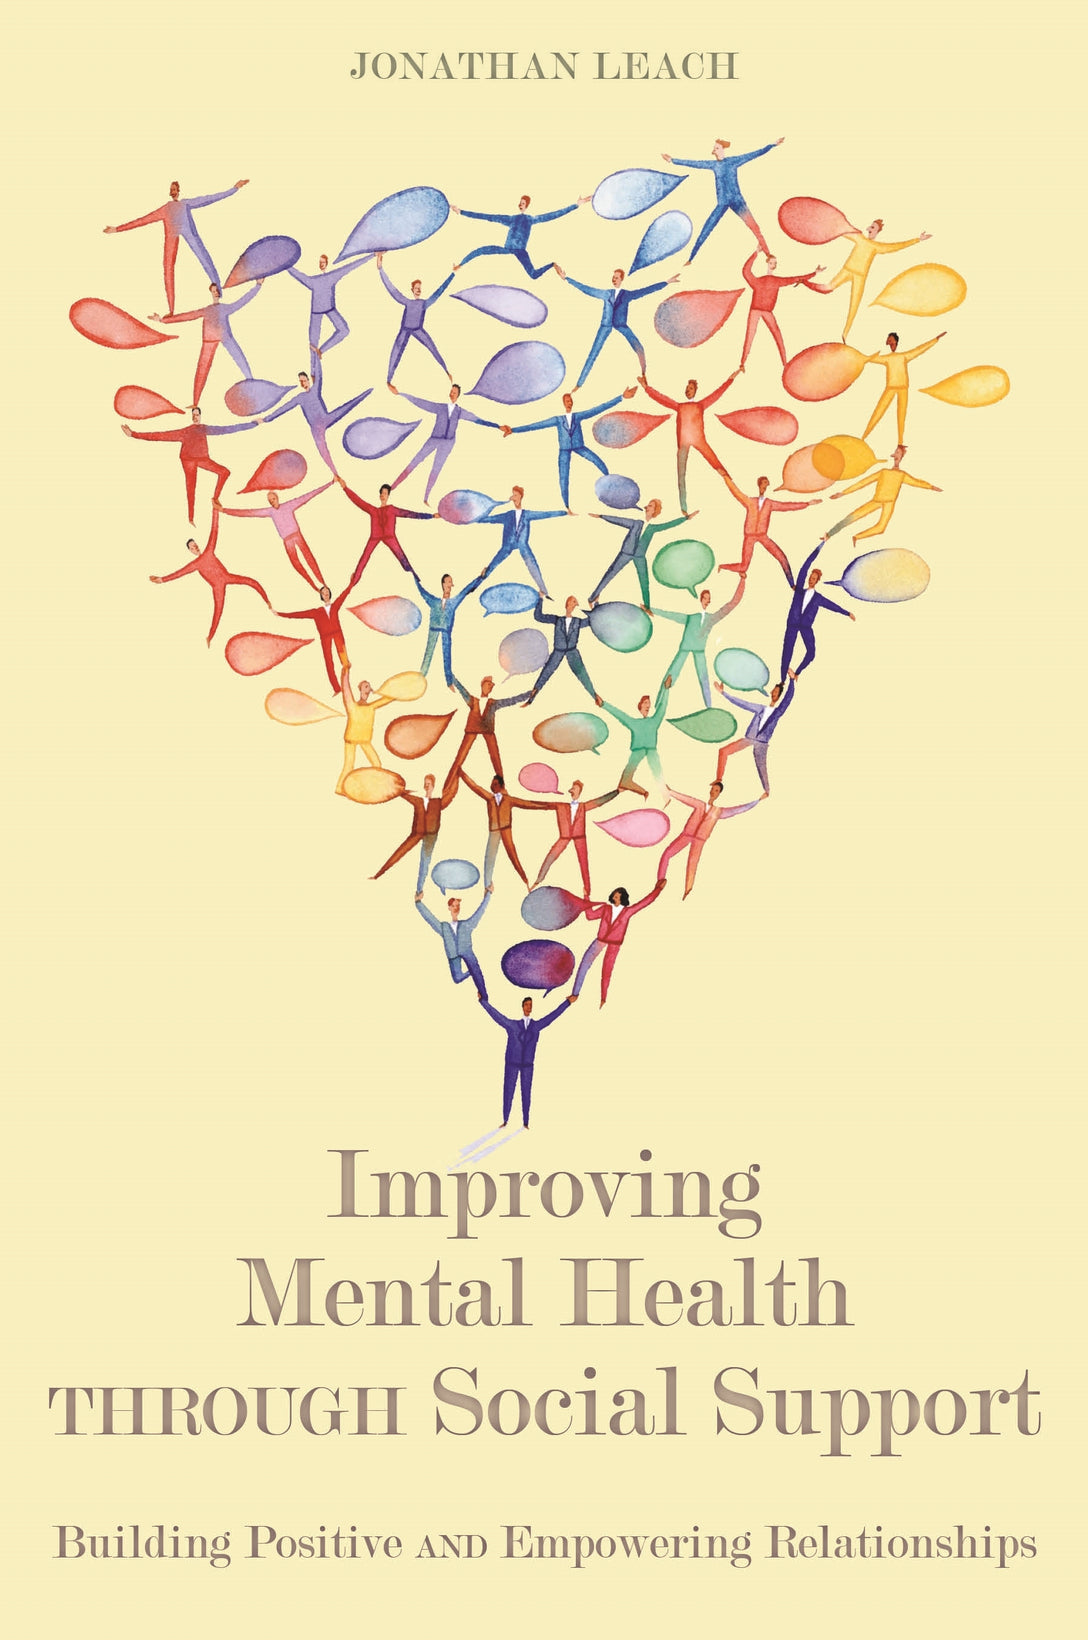 Improving Mental Health through Social Support by Jonathan Leach